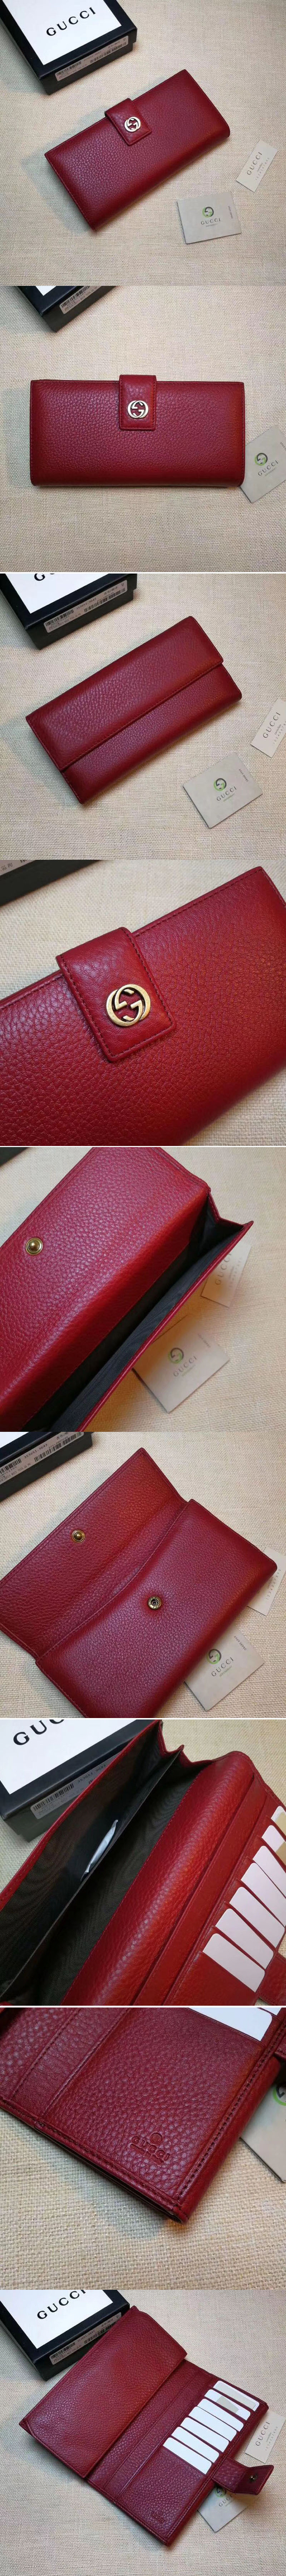 Replica Gucci 337335 Calf Leather Wallet Red